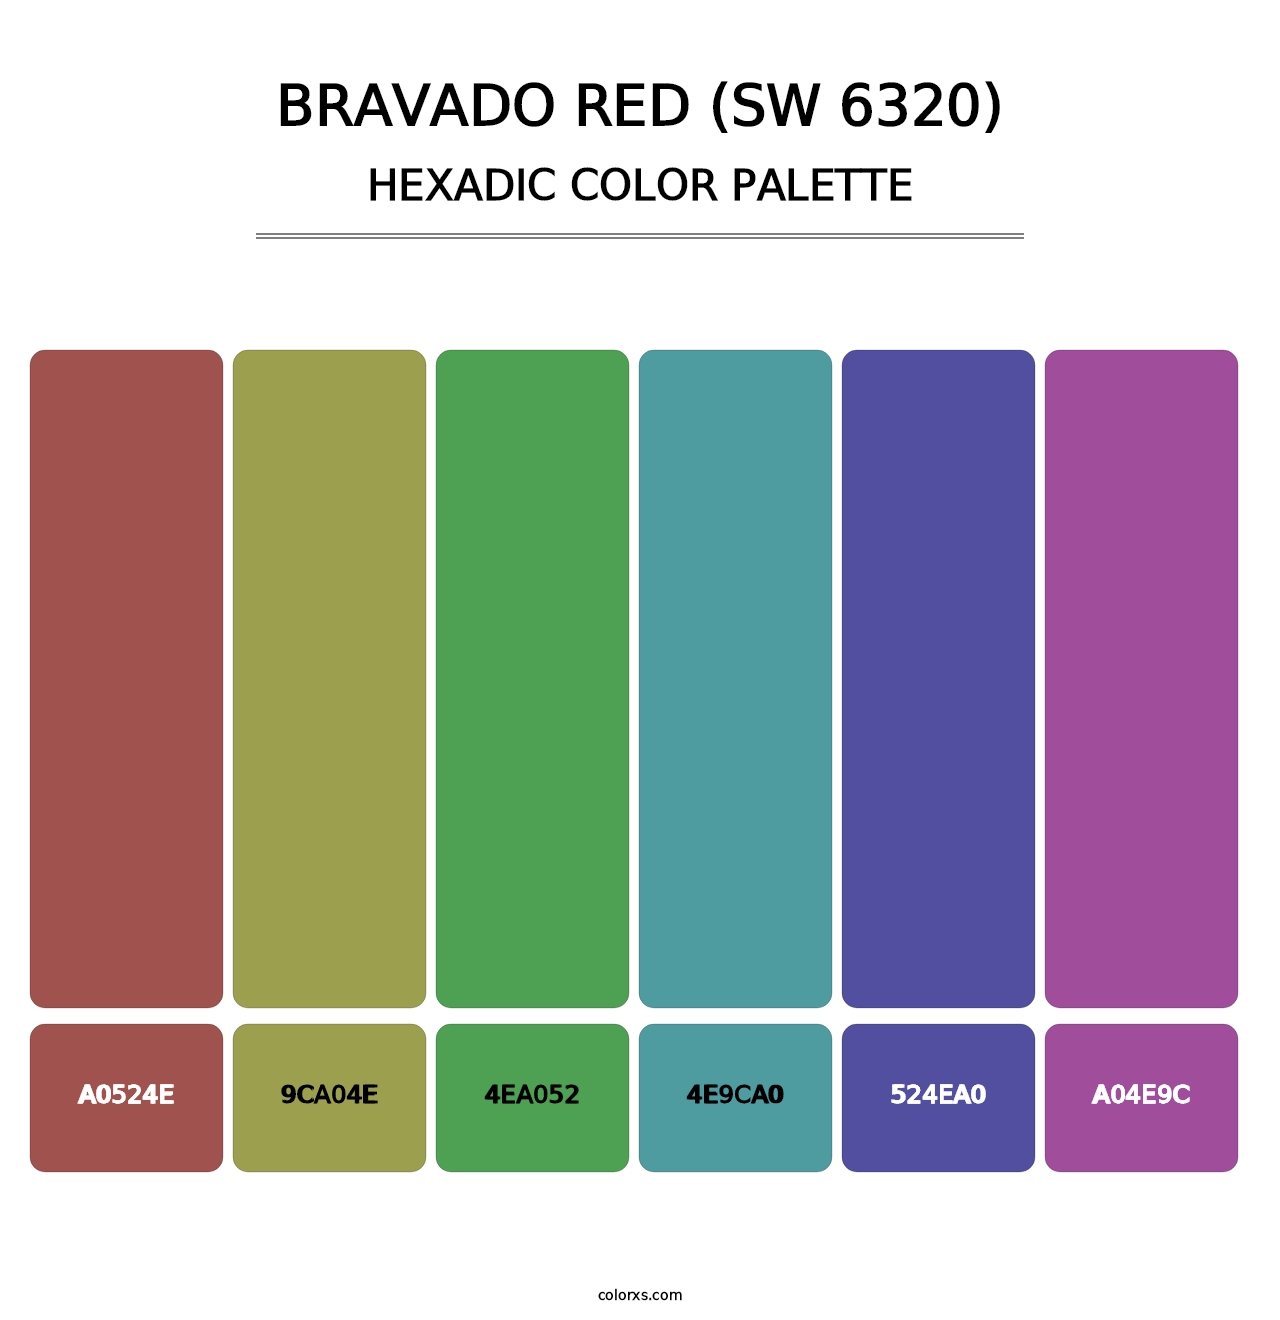 Bravado Red (SW 6320) - Hexadic Color Palette